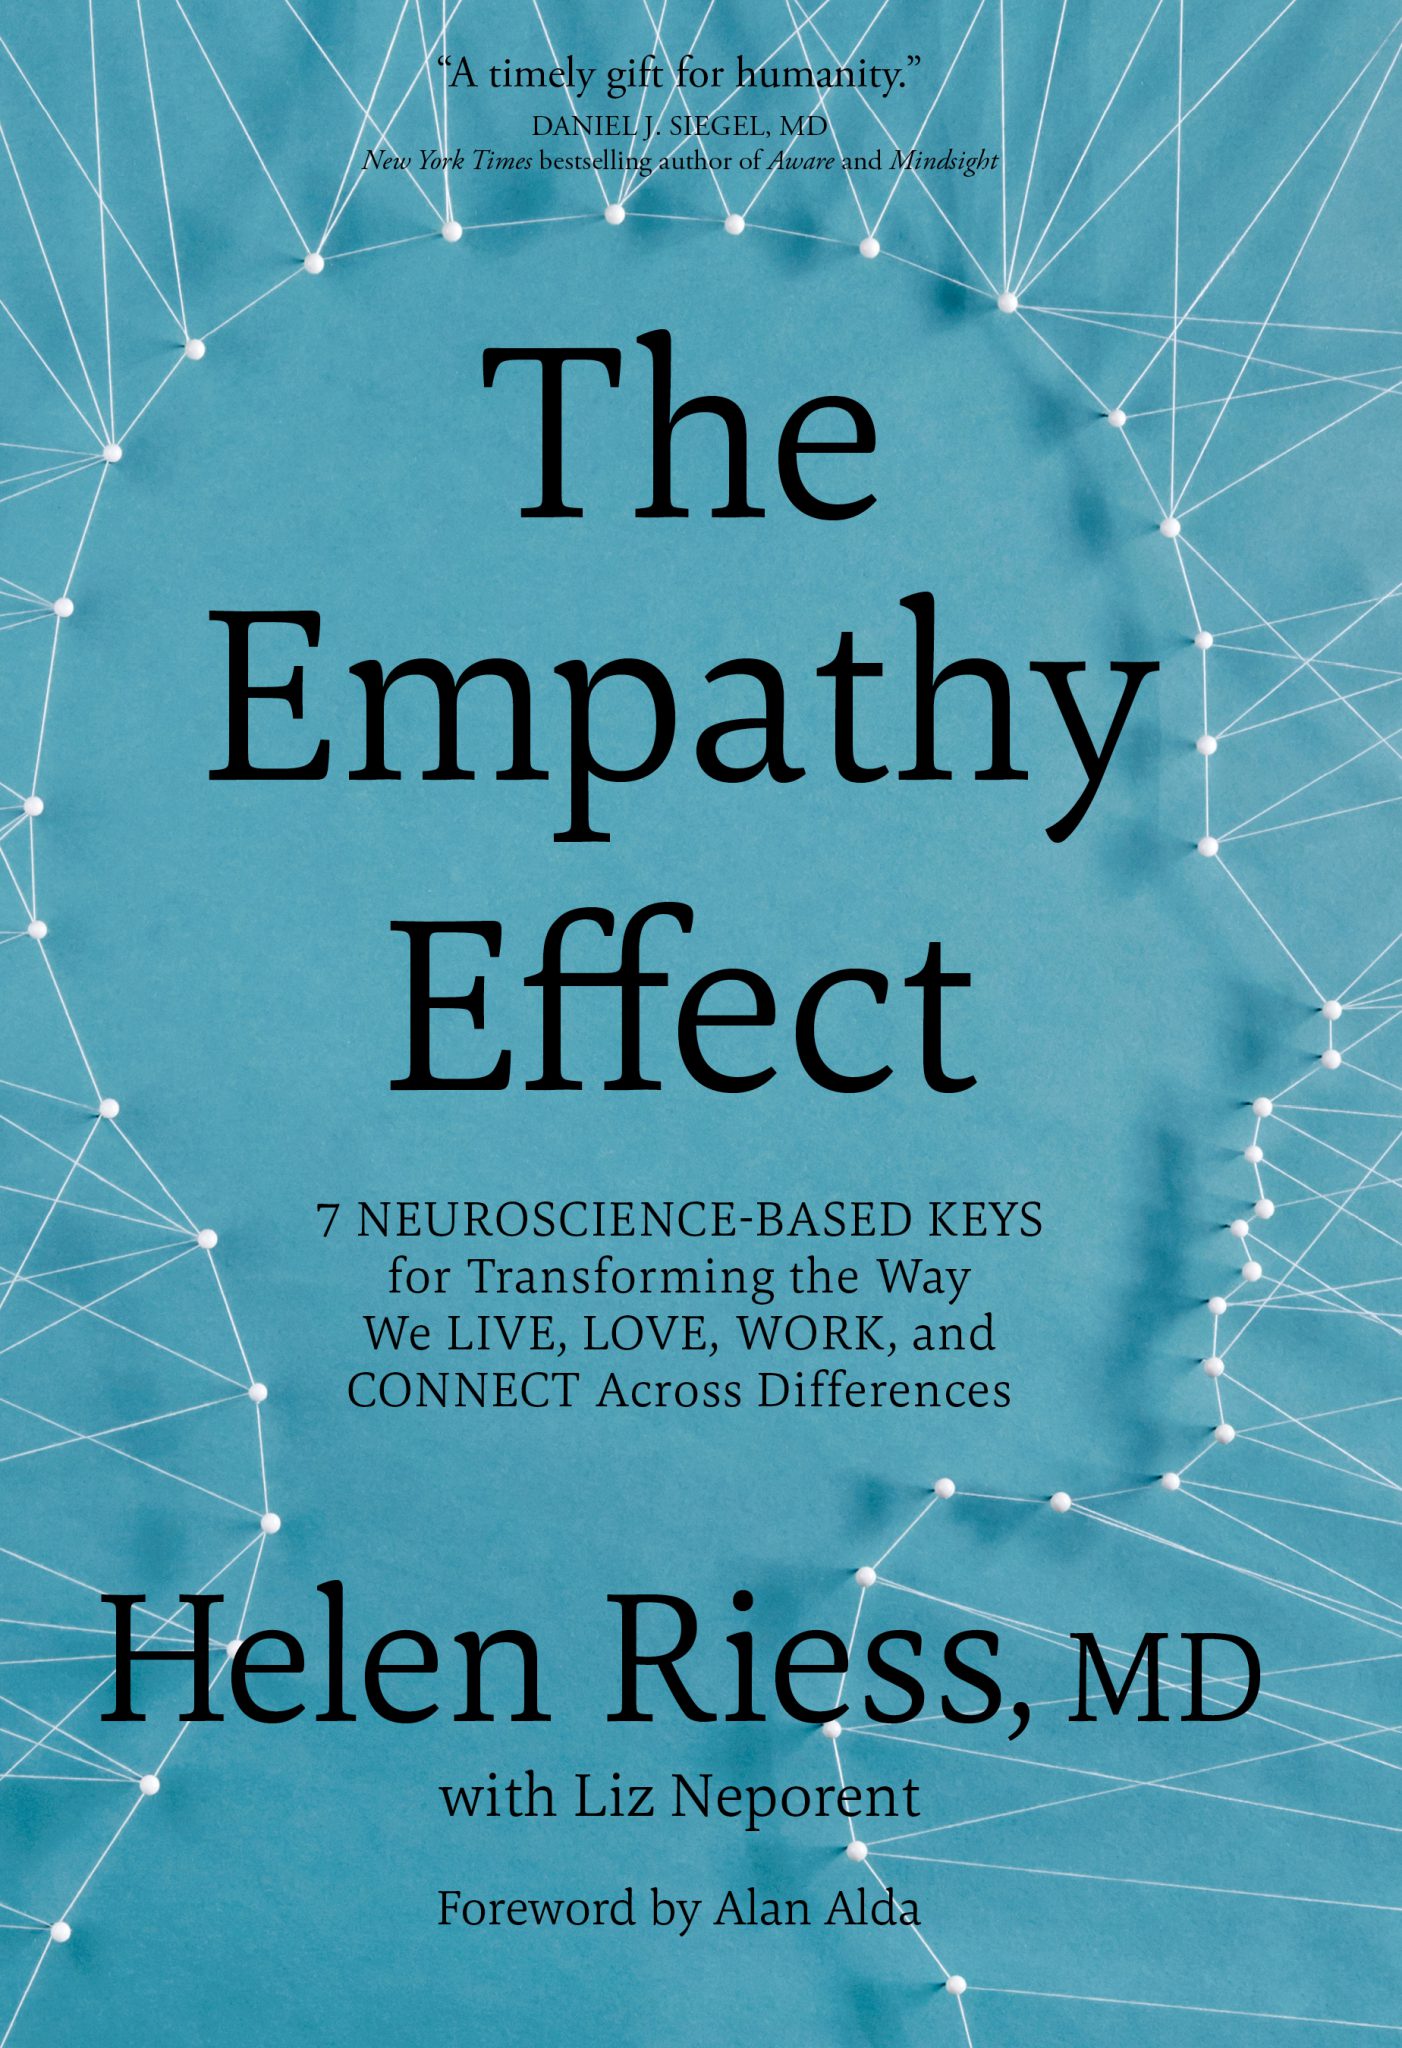 These Neuroscience-Based Keys Can Help Leaders Build Empathy | SOCAP Global